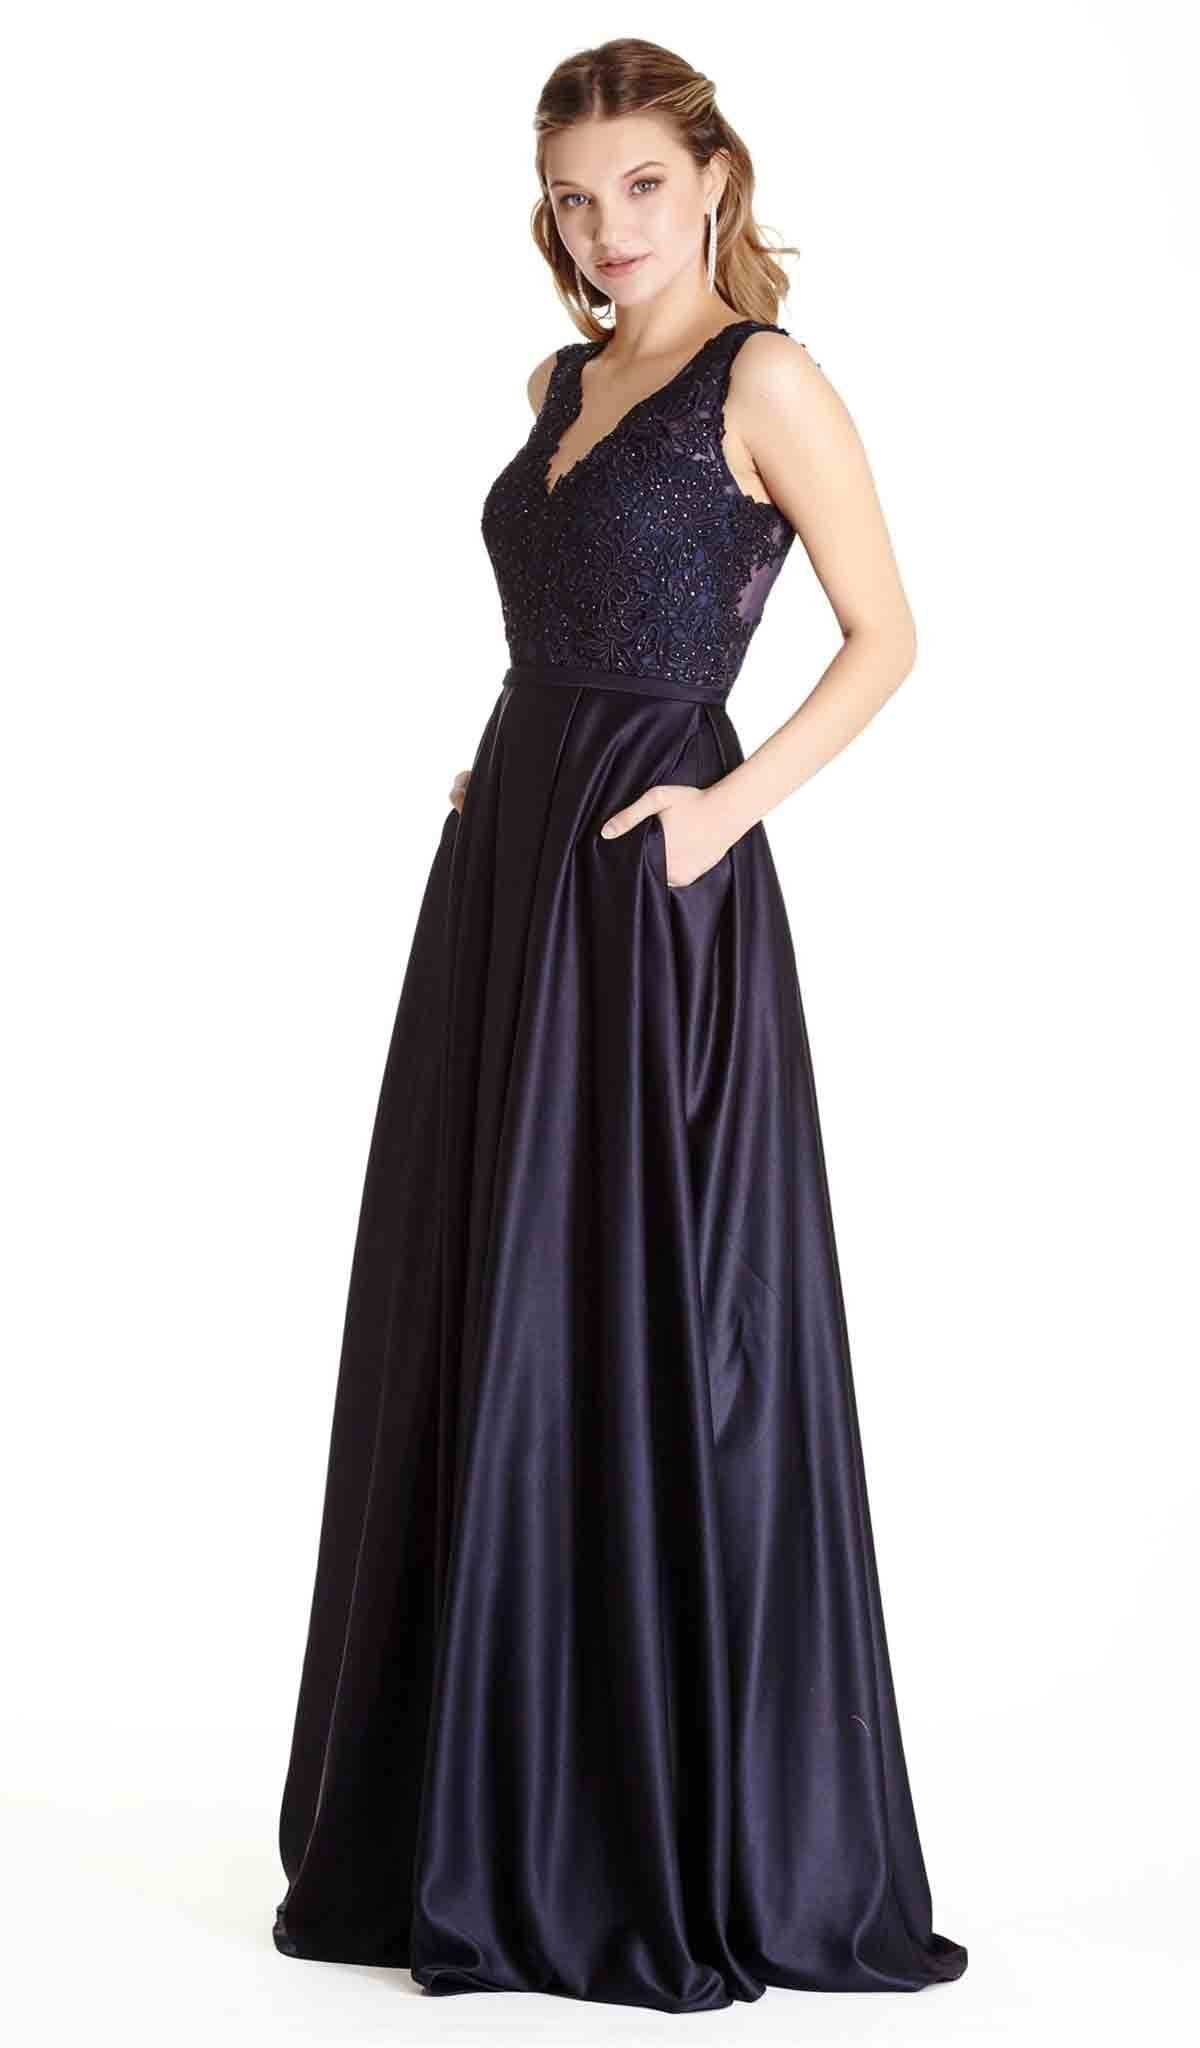 Aspeed Design - Beaded Lace V-neck A-line Evening Dress
